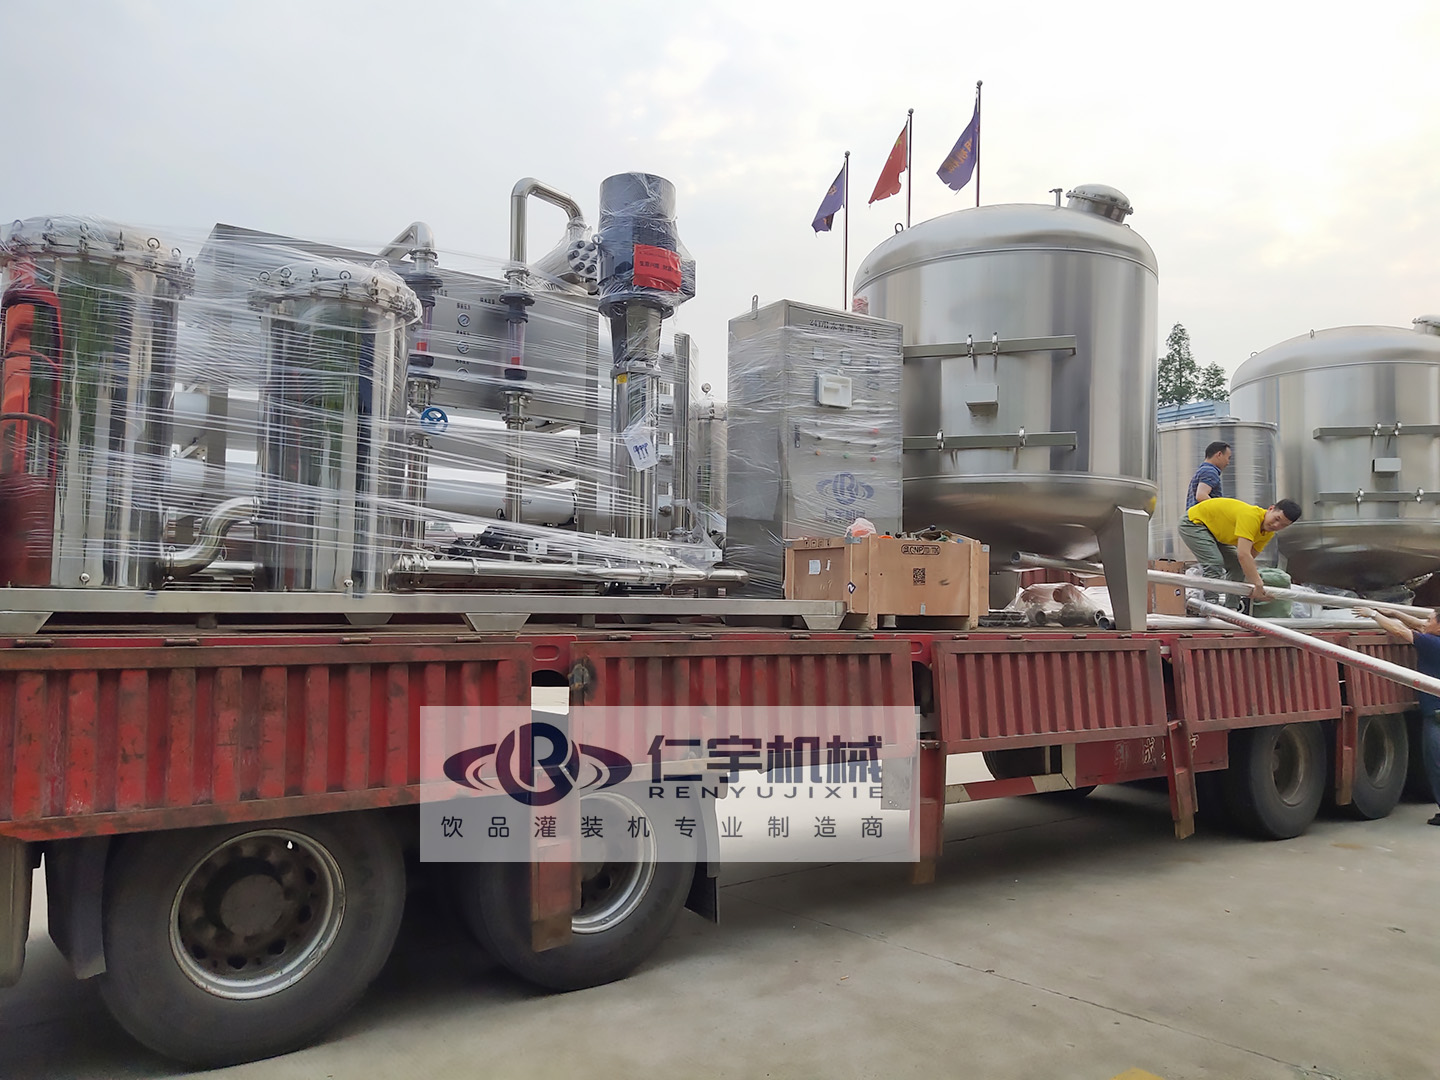 24T water treatment equipment sent to Lianyungang